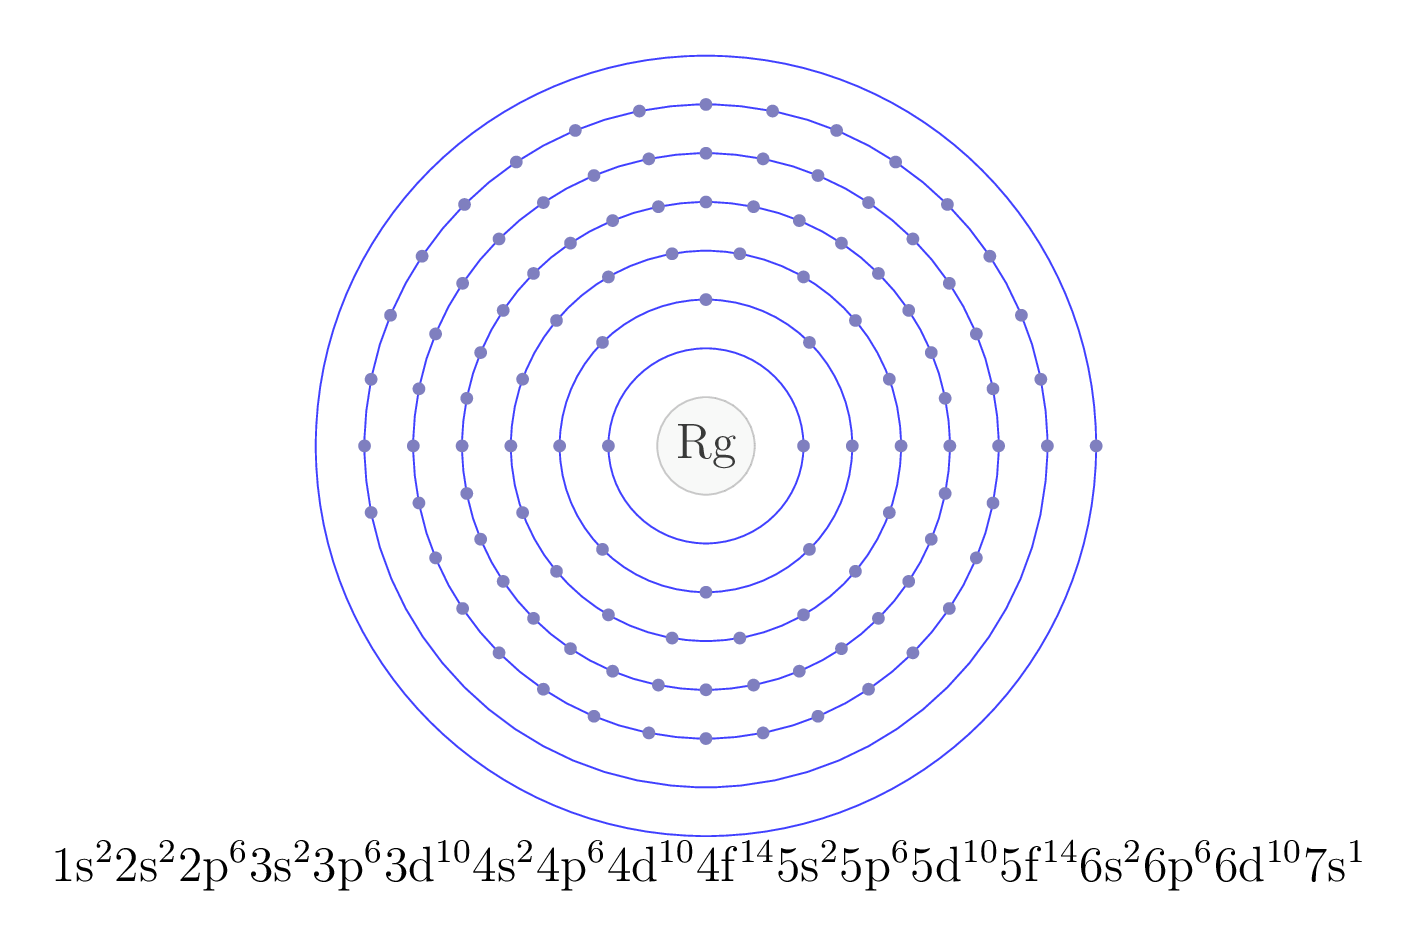 electron configuration of element Rg